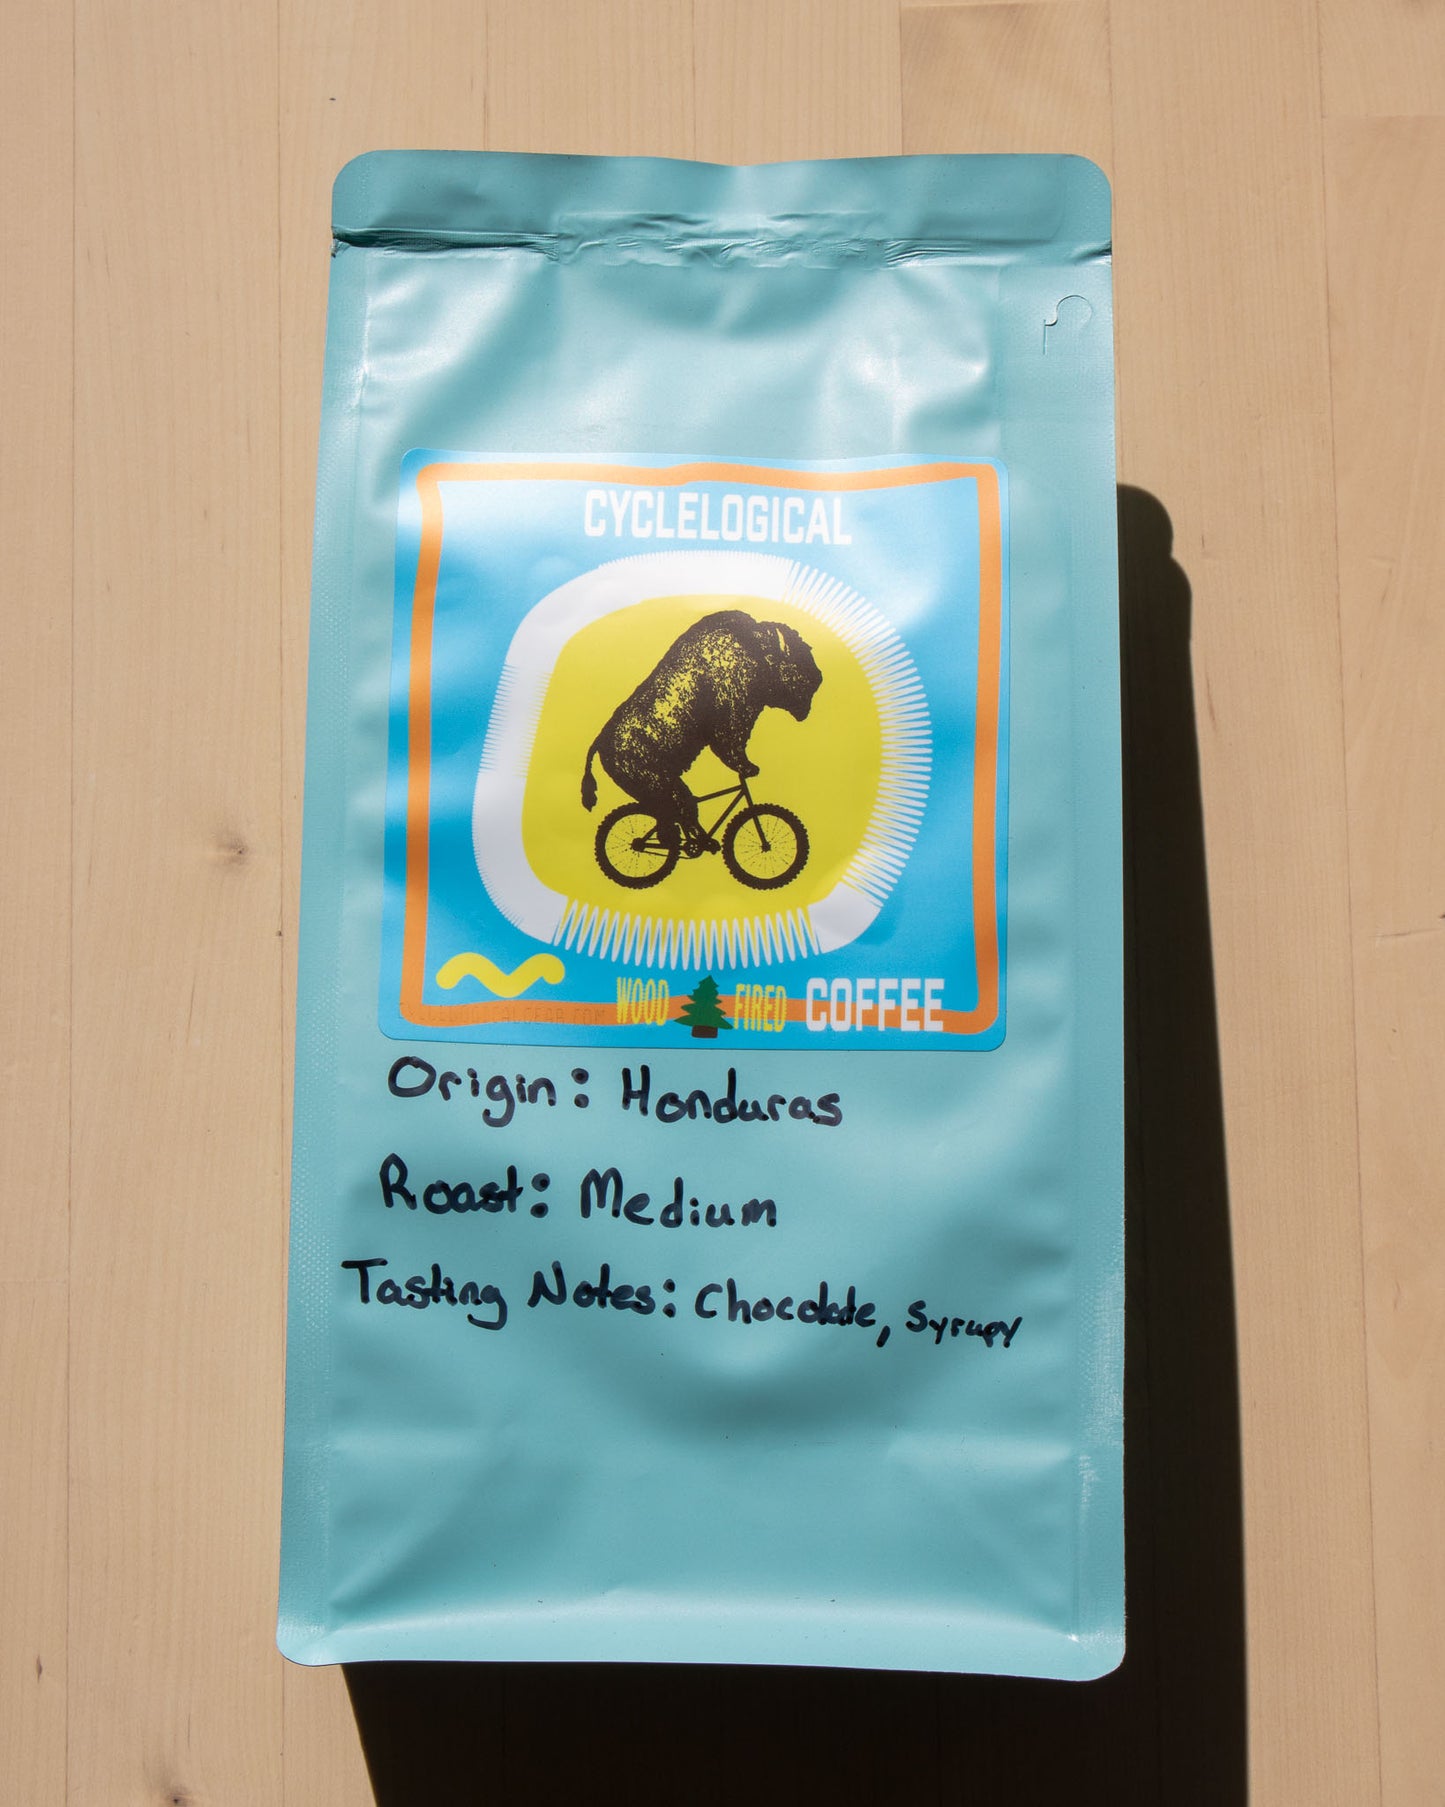 Single origin, medium roast Honduran coffee in a blue bag with Cyclelogical Logo